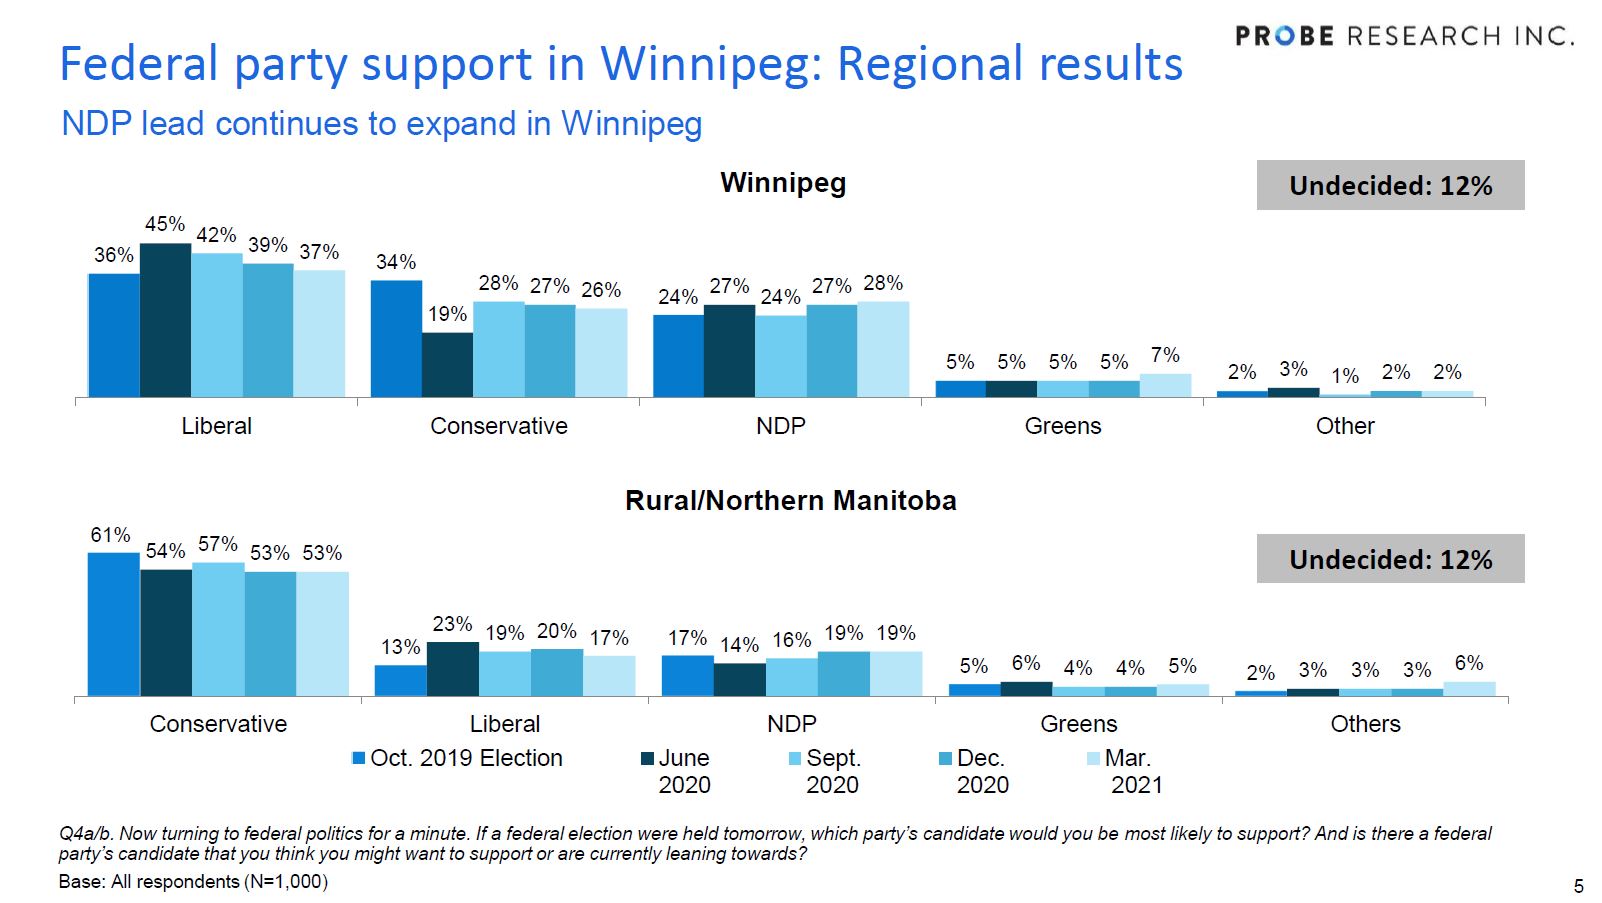 federal vote intention Winnipeg vs. rural Manitoba - March 2021